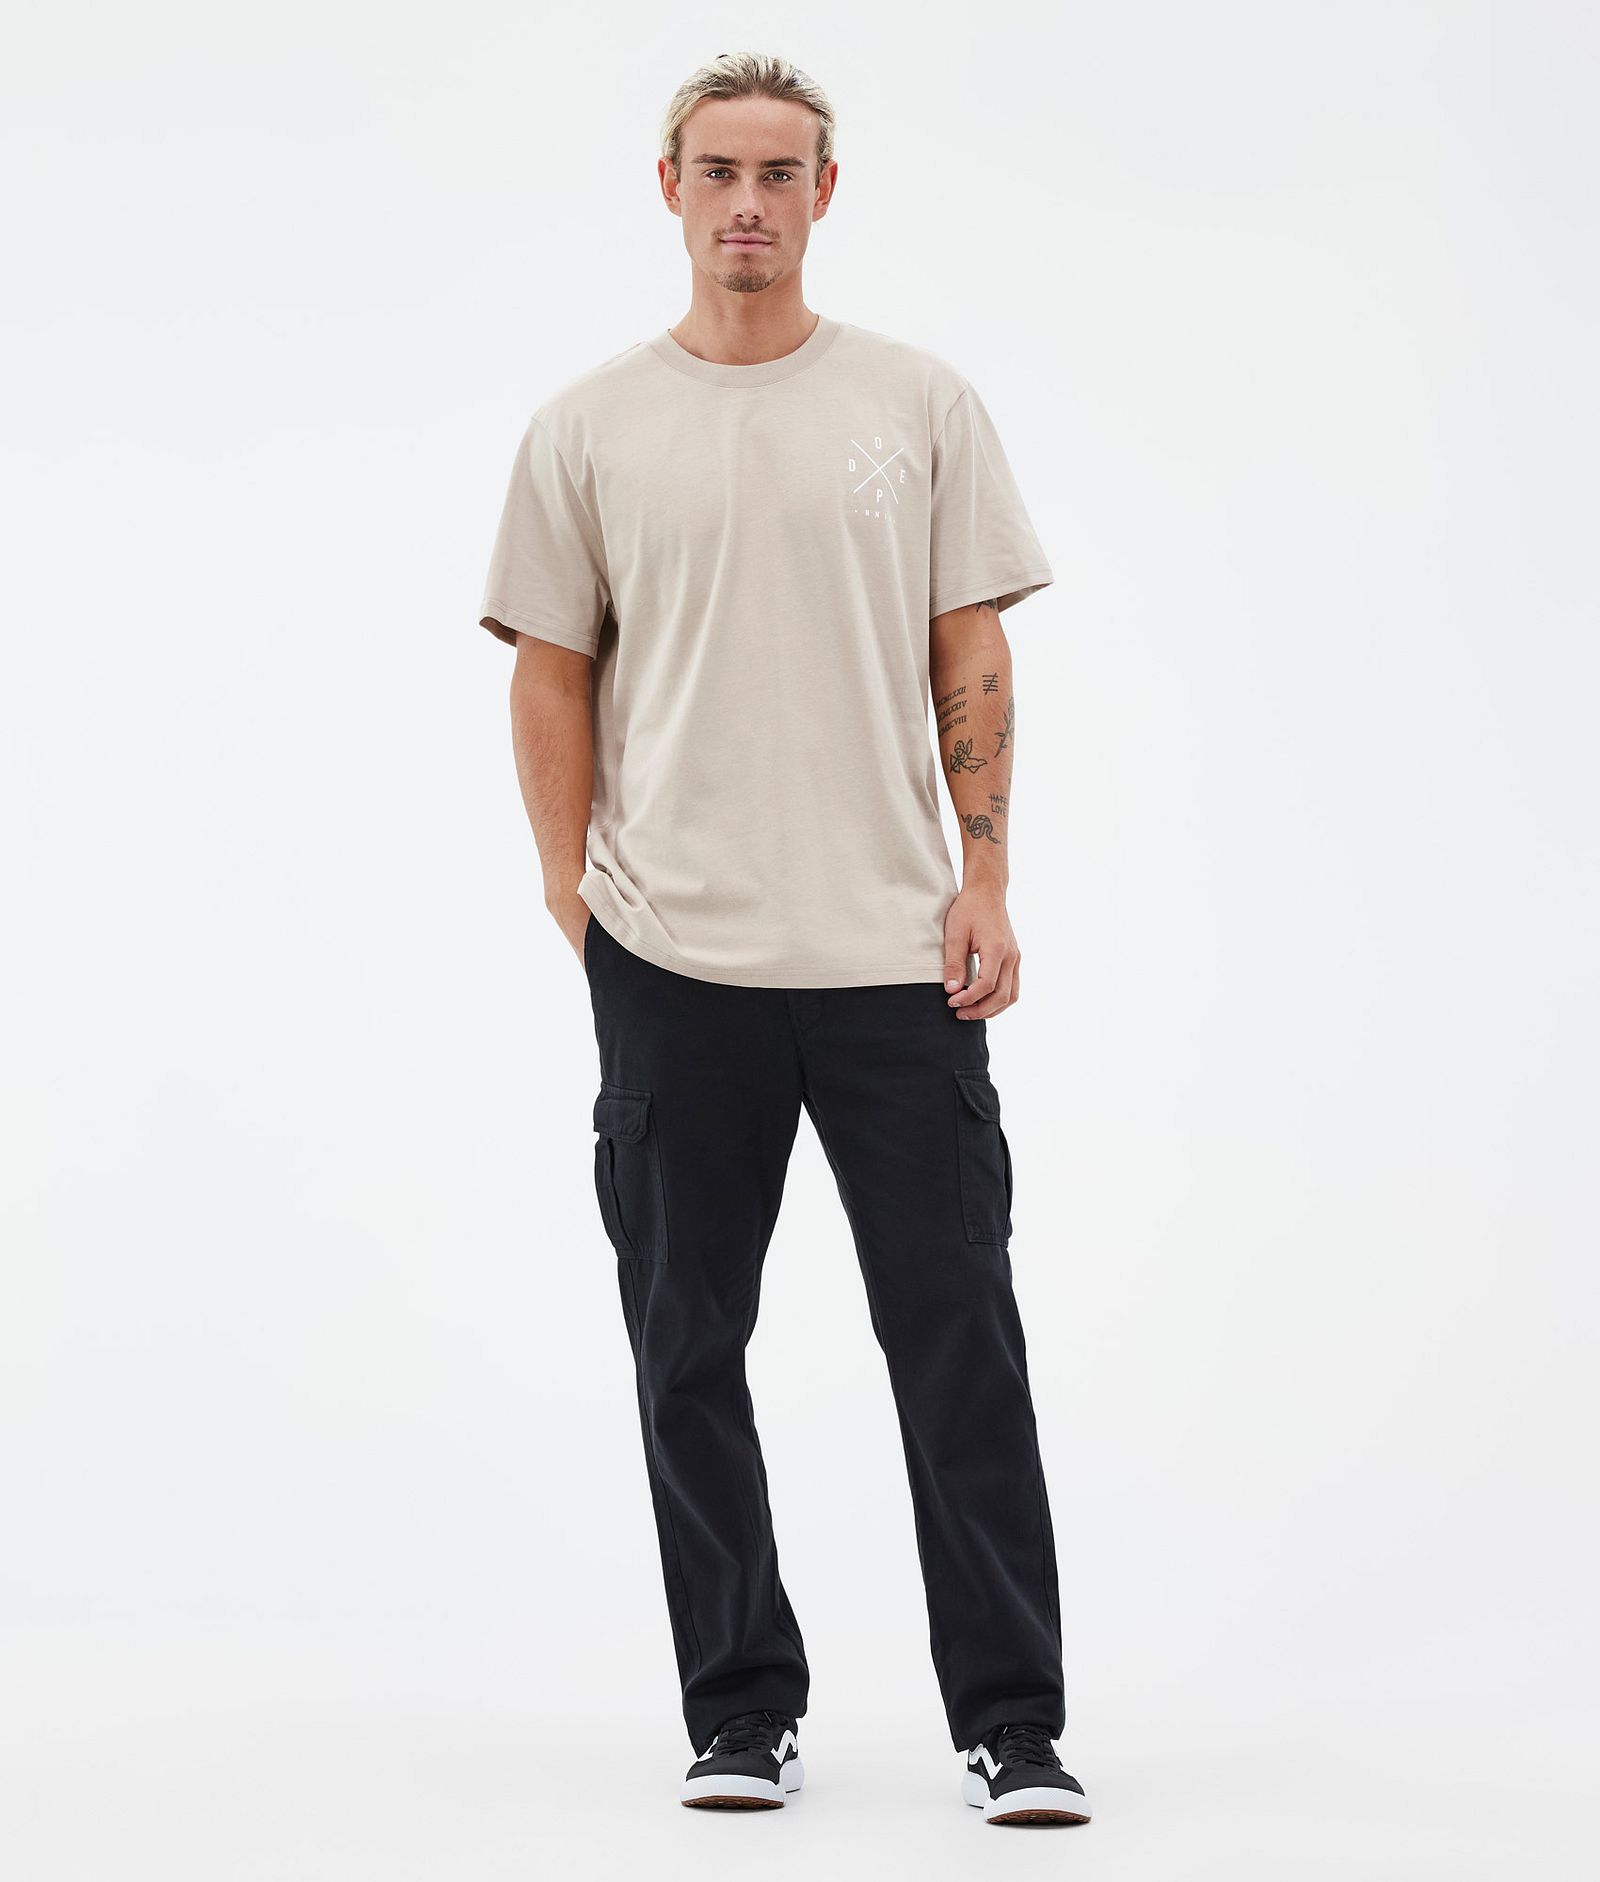 Standard Tシャツ メンズ 2X-Up Sand